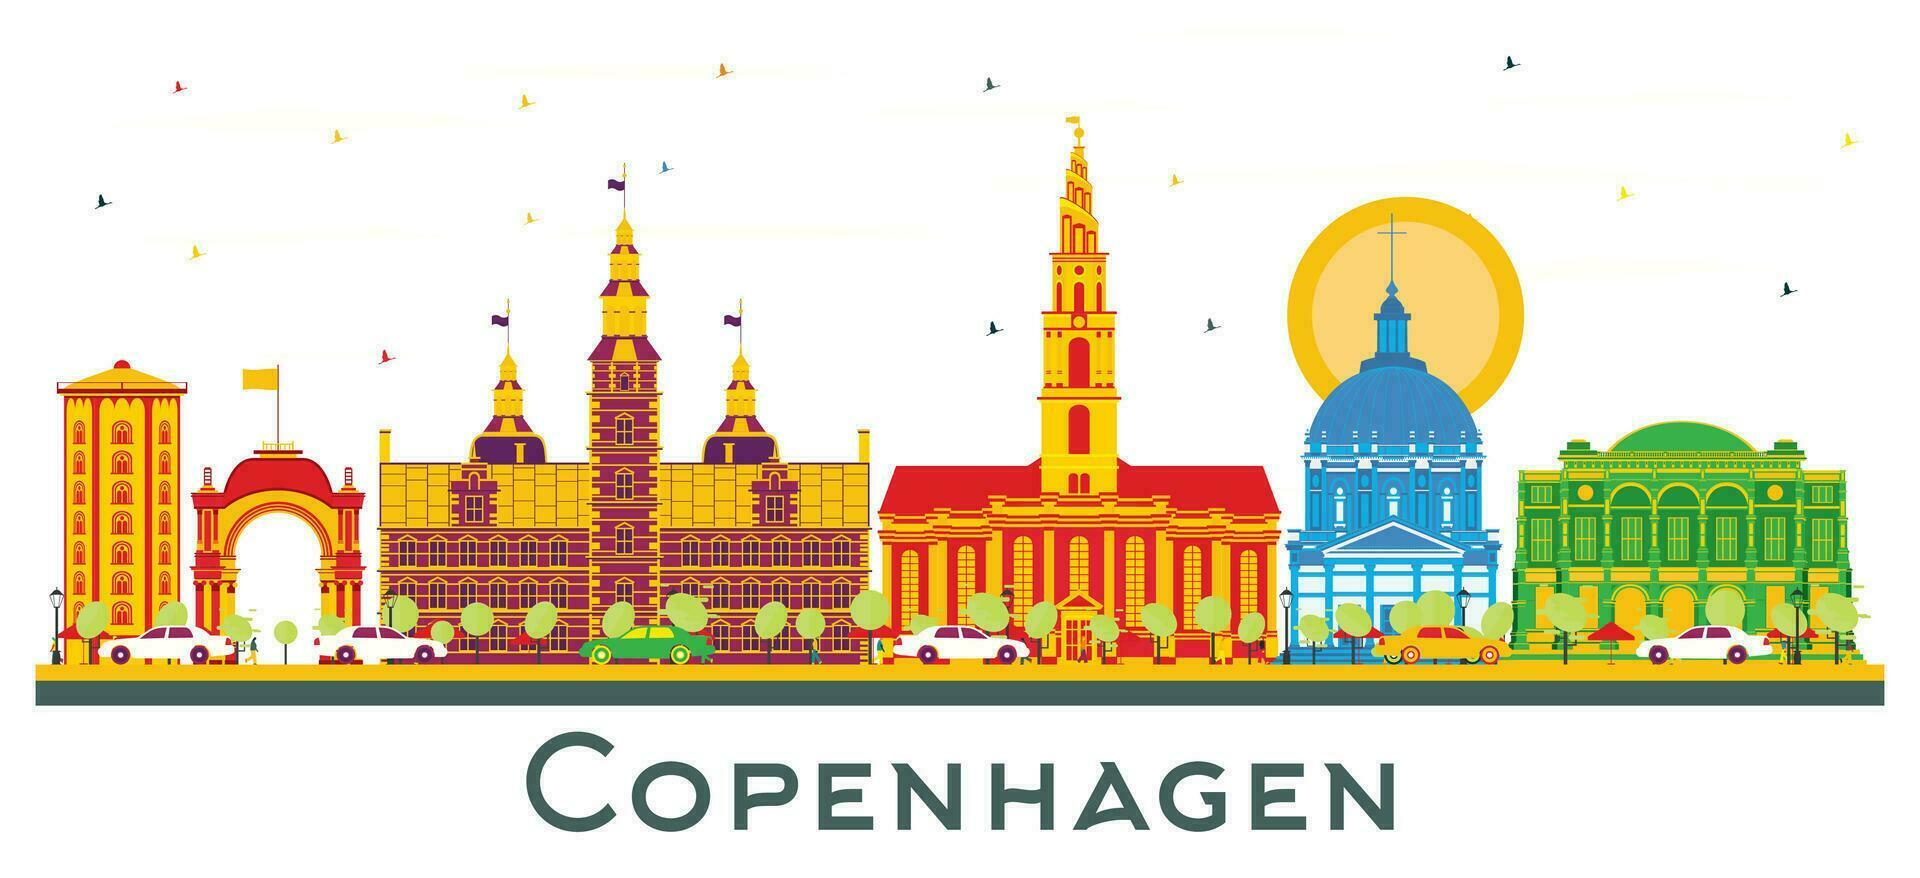 Copenhagen Denmark City Skyline with Color Buildings Isolated on White. vector